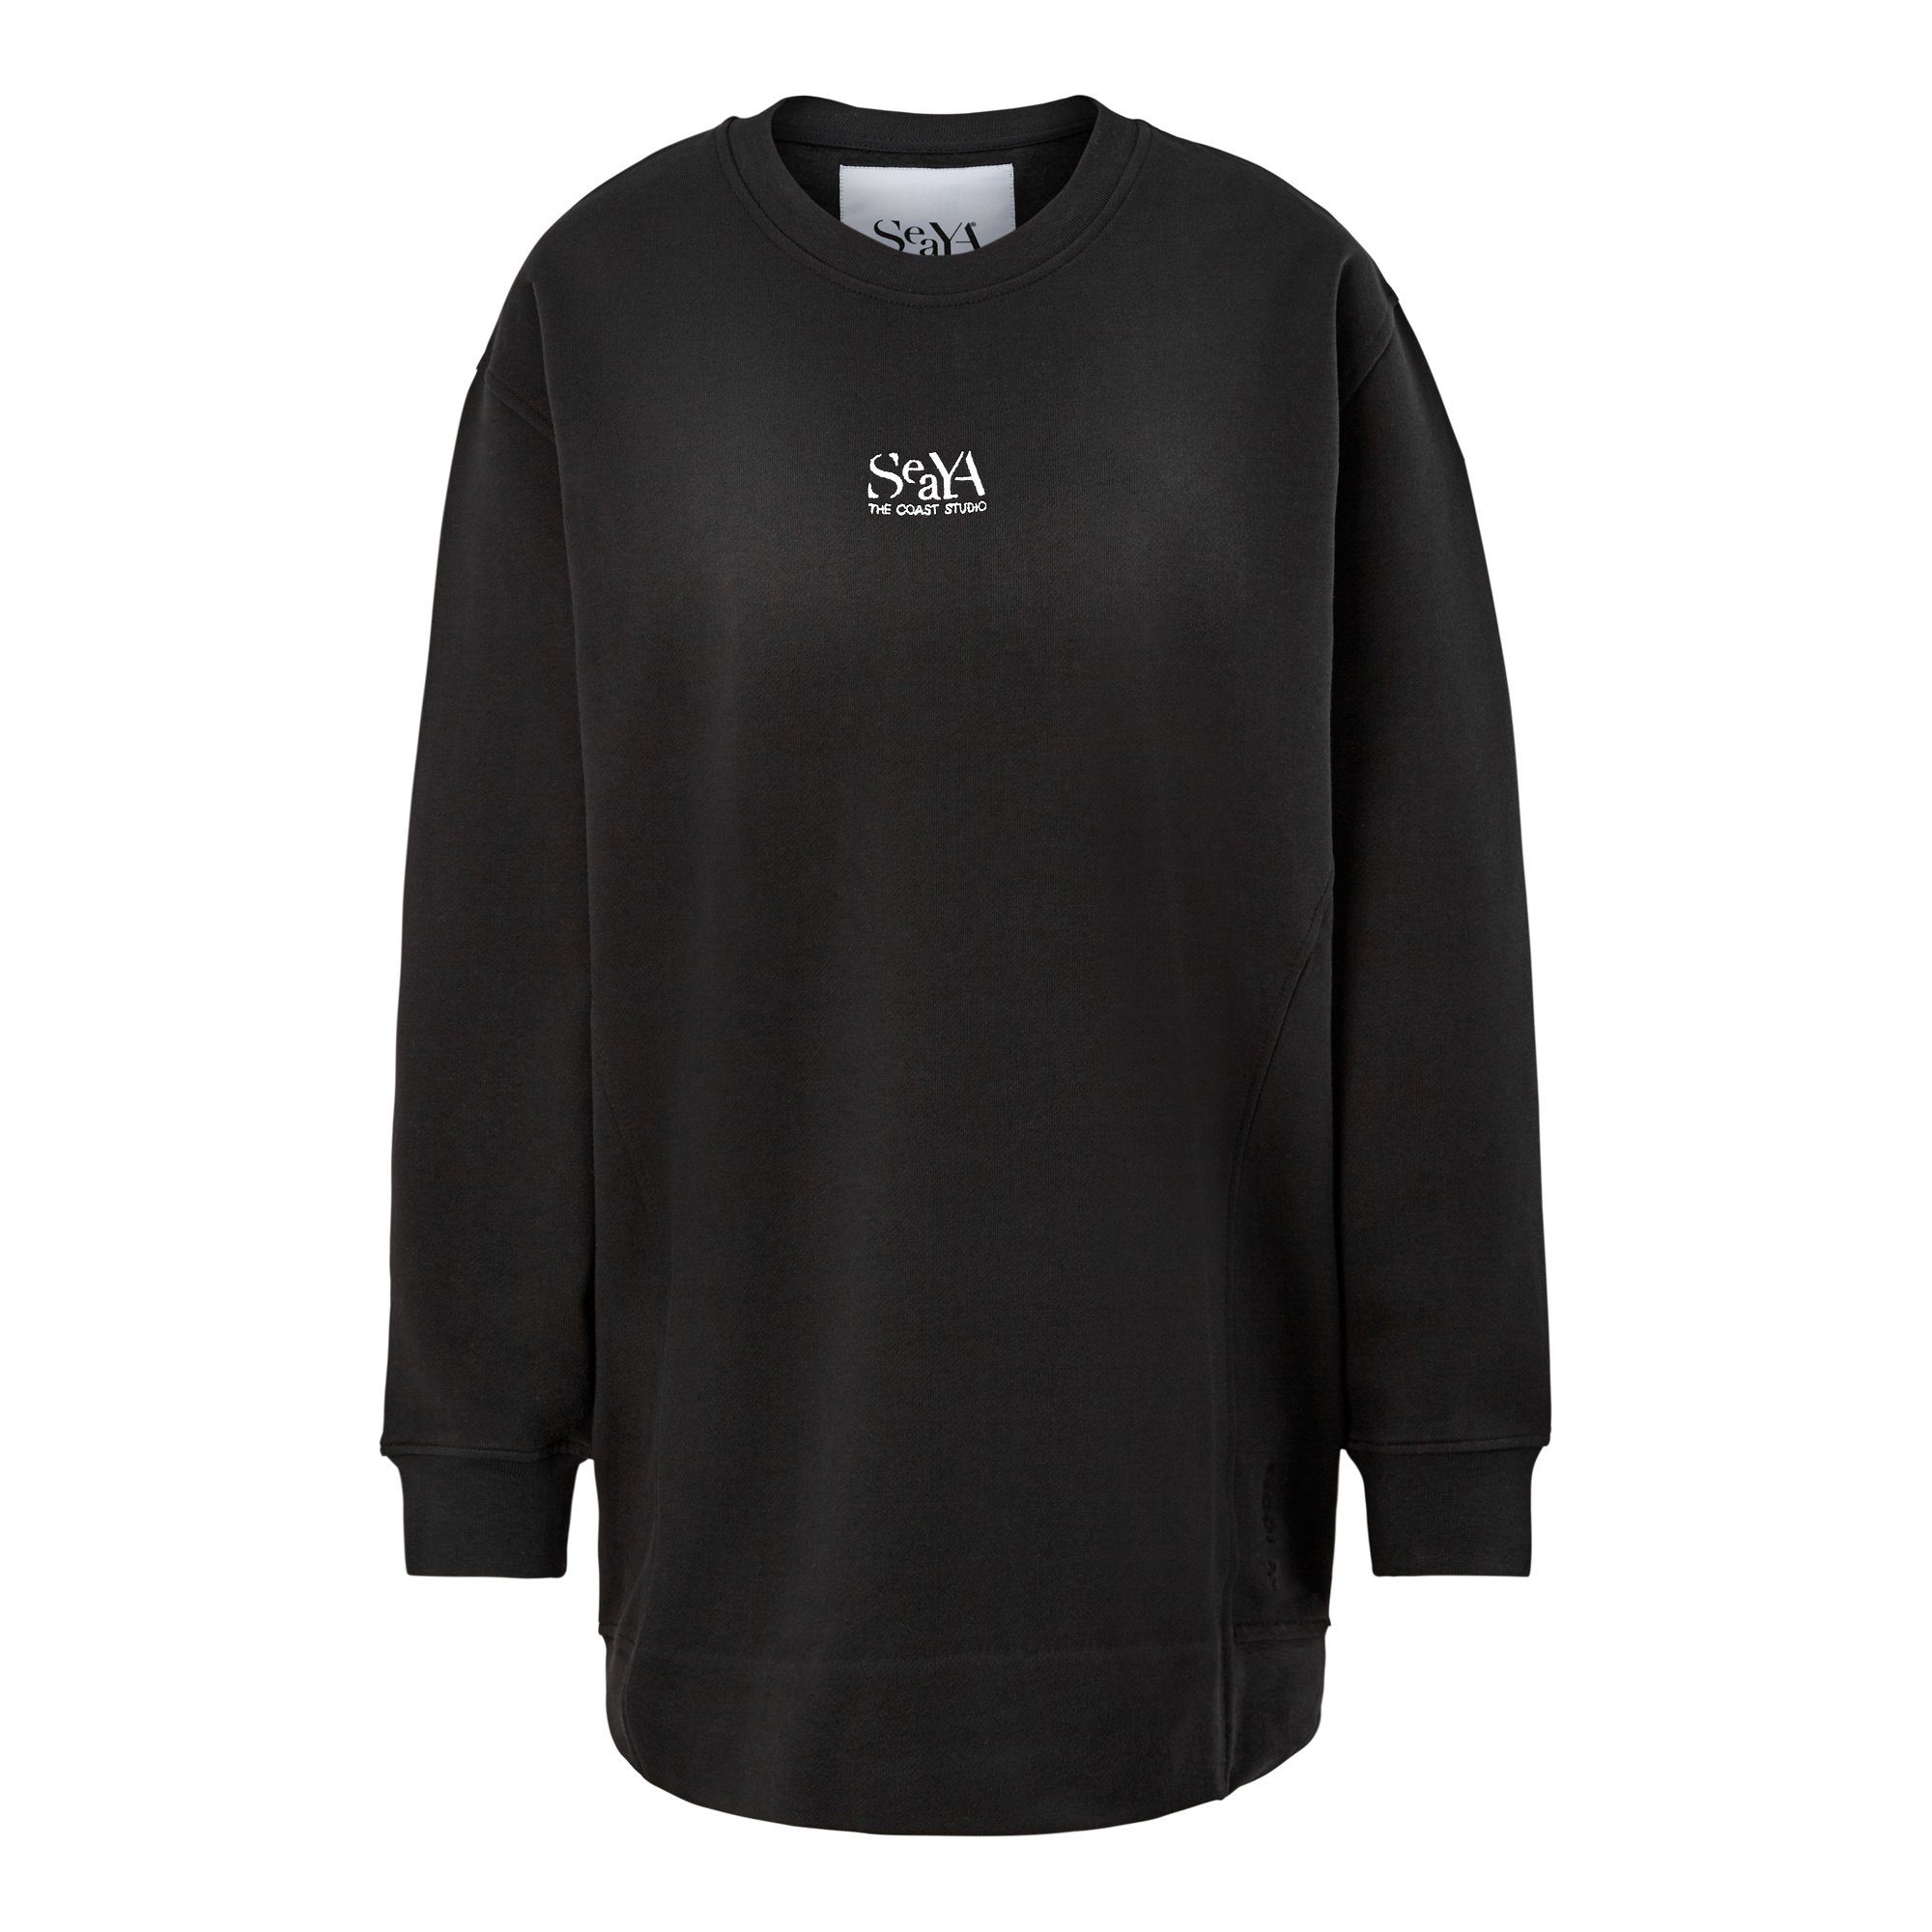 SeaYA lang Sweatshirt Stickerei Biobaumwolle Sweatshirt schwarz